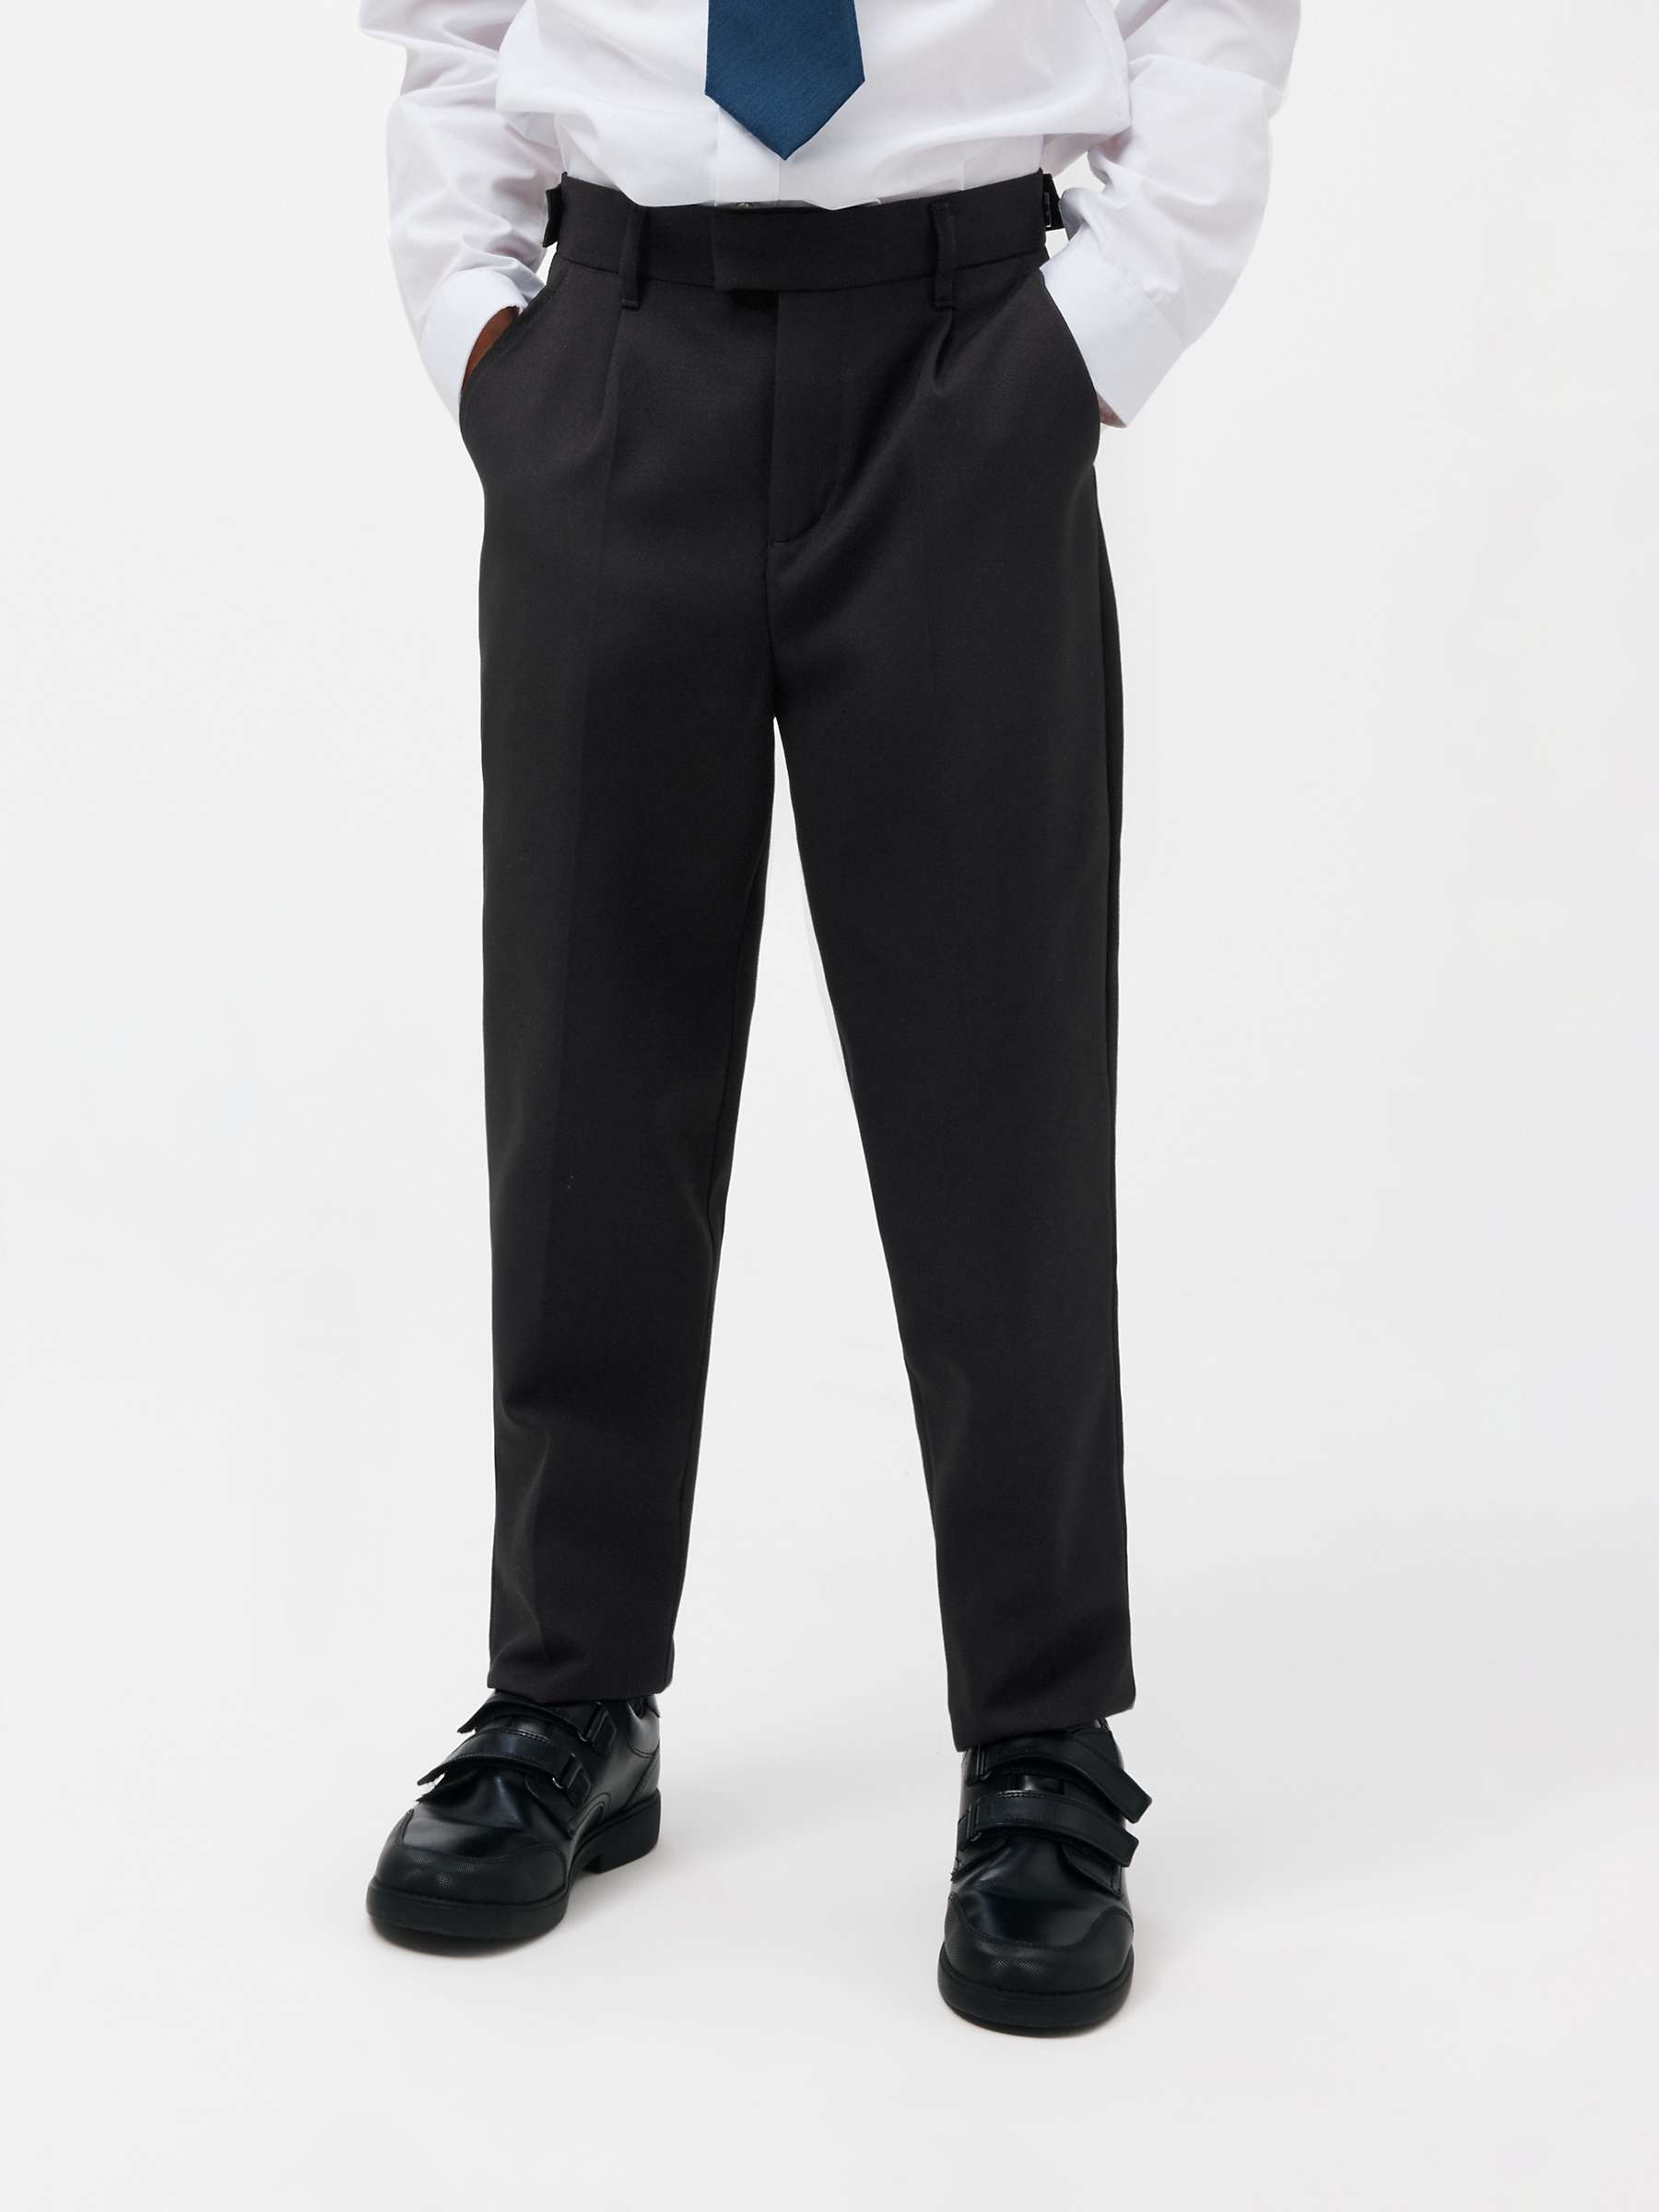 Buy John Lewis Boys' Adjustable Waist Tailored School Trousers Online at johnlewis.com